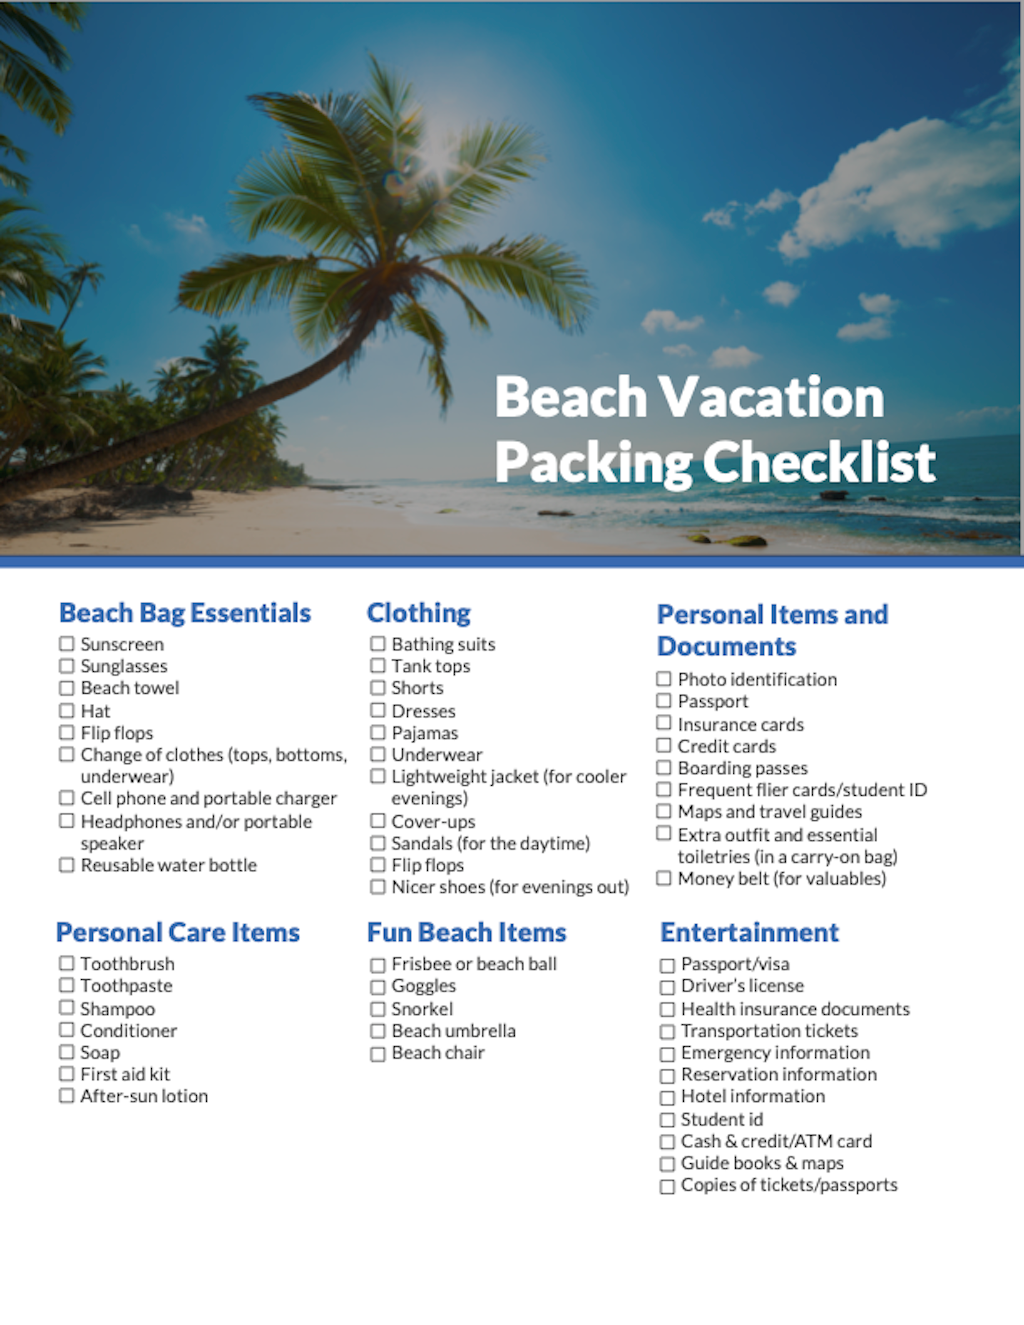 Beach Vacation Packing Checklist